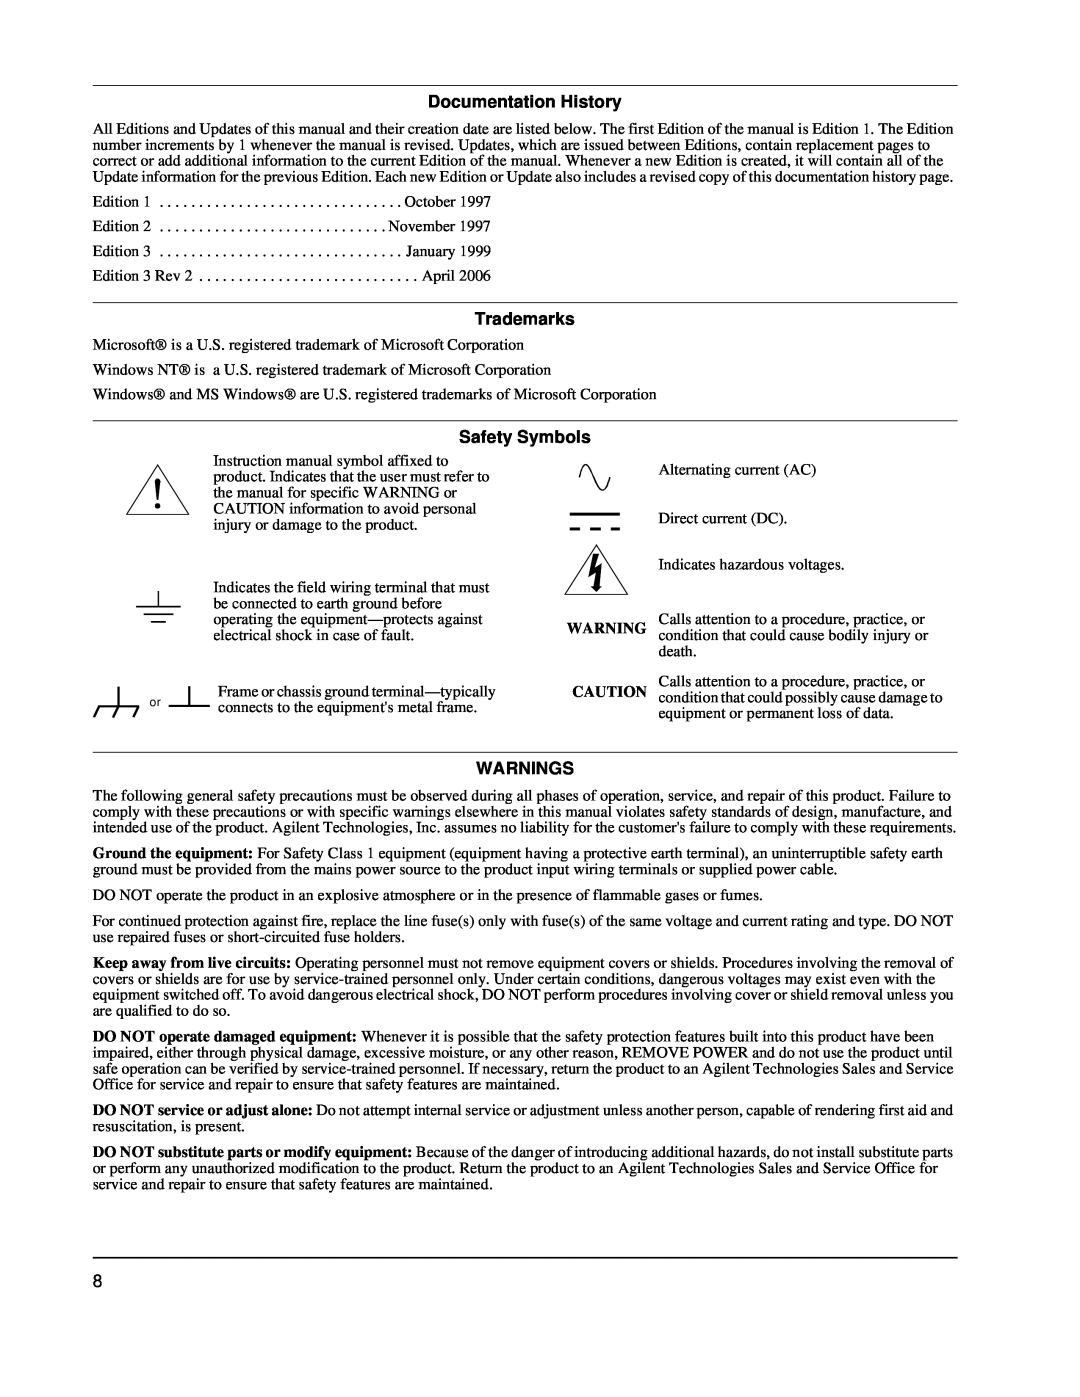 Agilent Technologies E1441A user service Documentation History, Trademarks, Safety Symbols, Warnings 